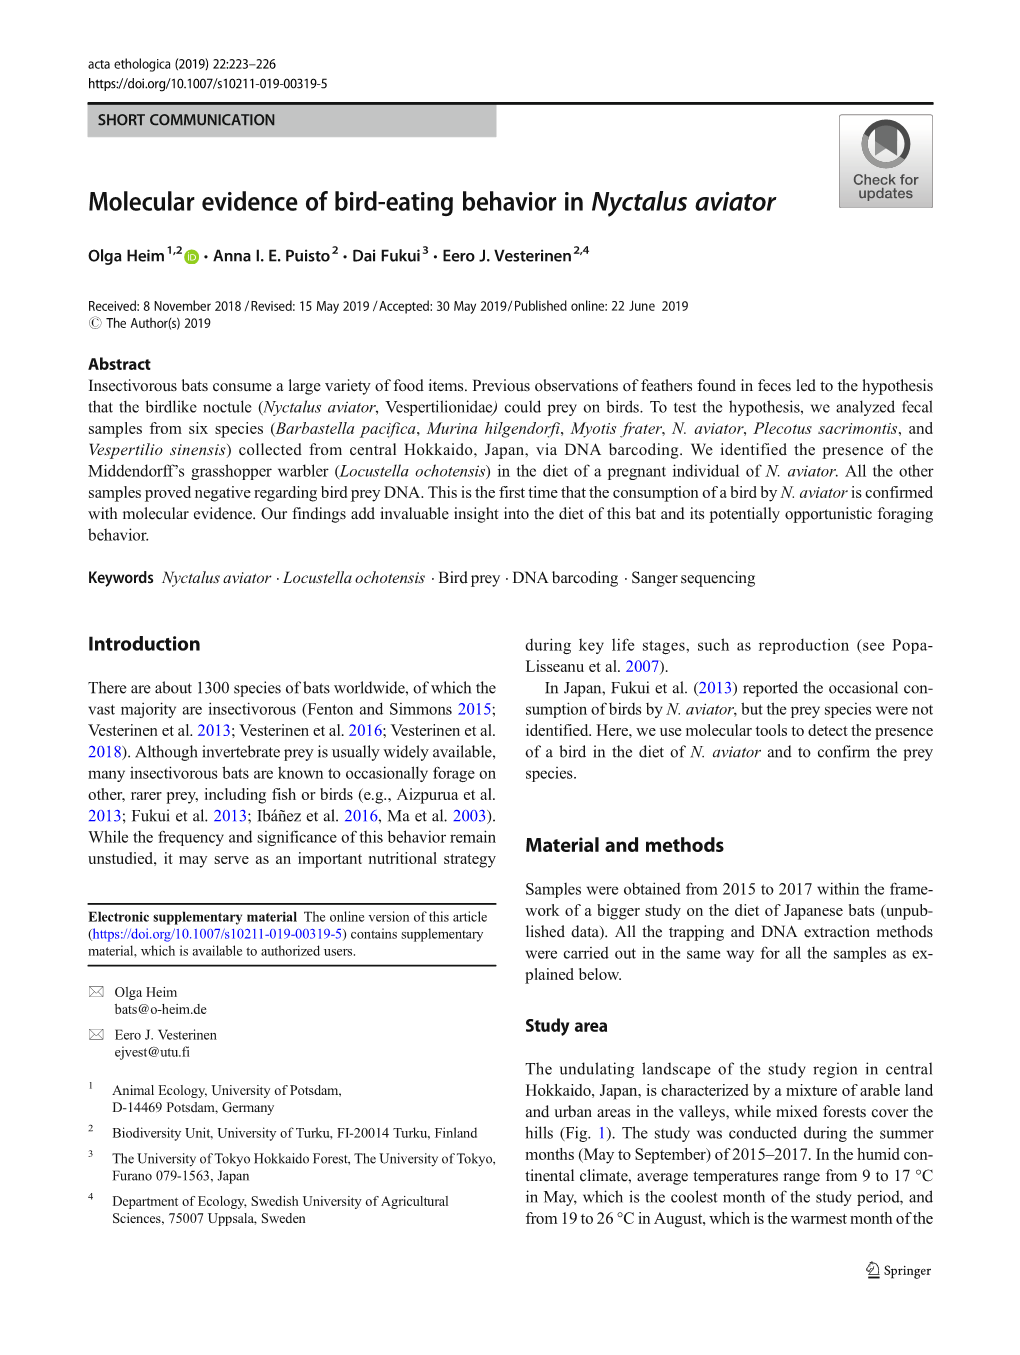 Molecular Evidence of Bird-Eating Behavior in Nyctalus Aviator